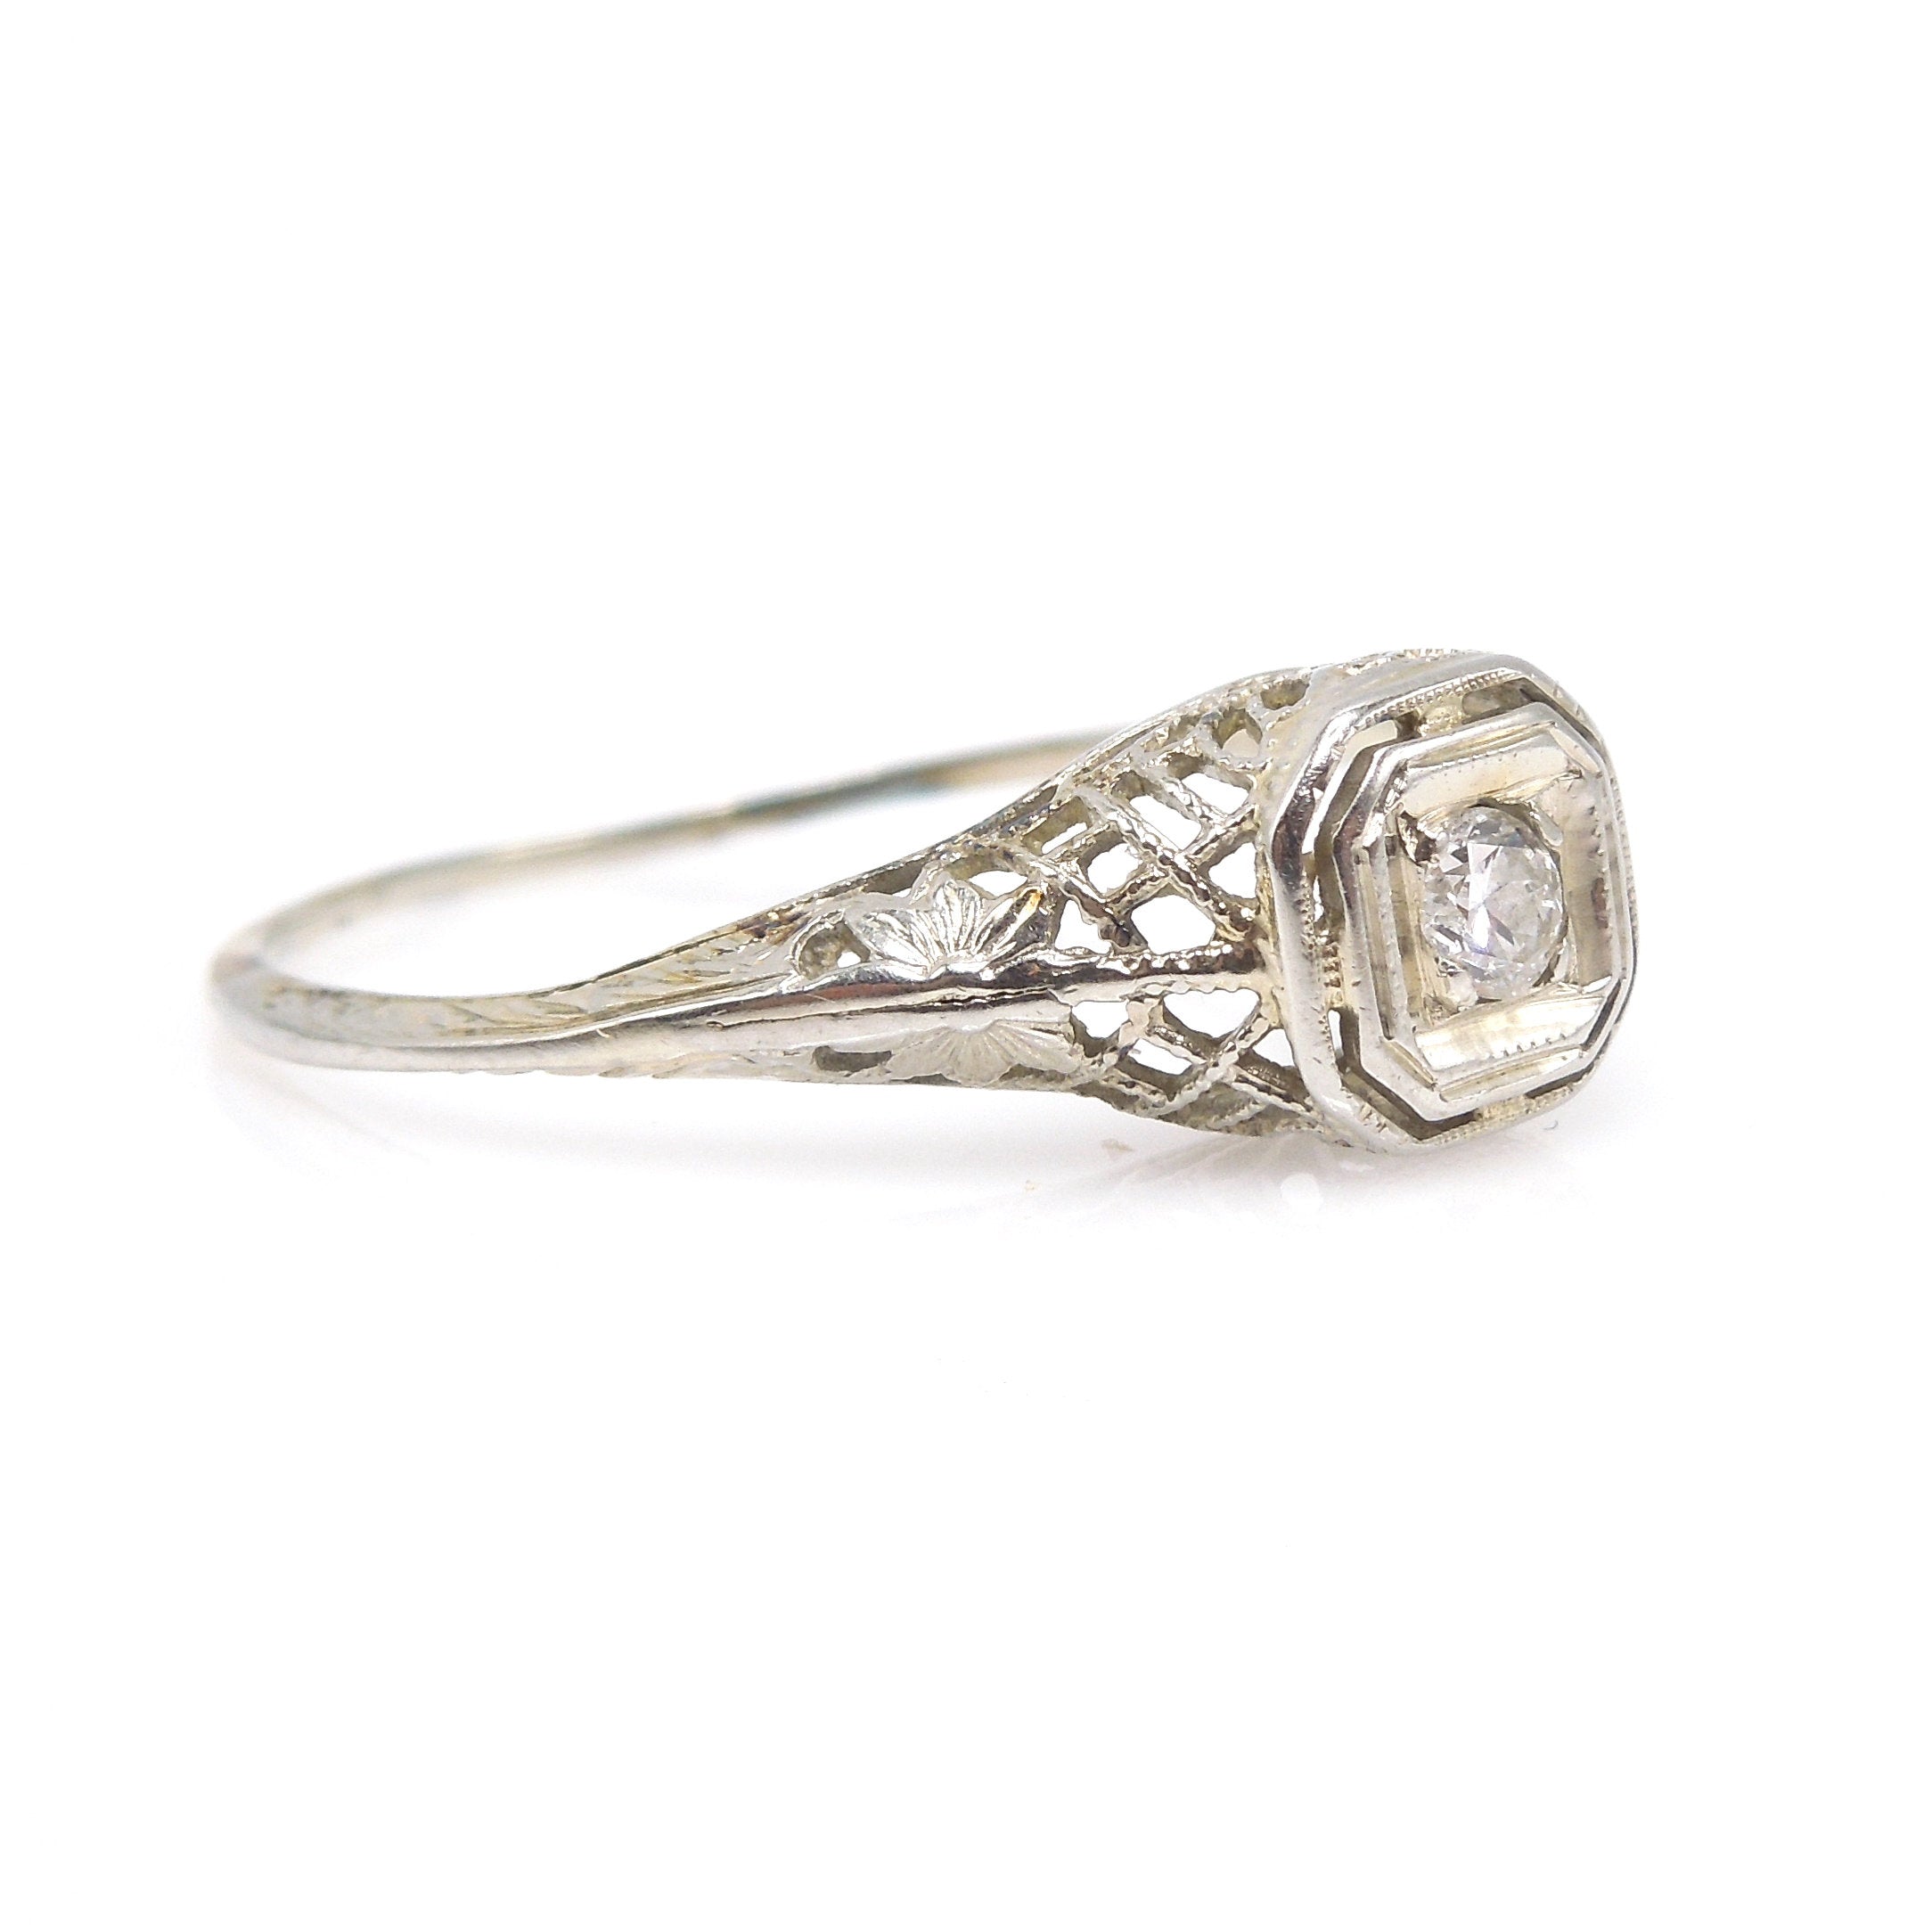 Petite Art Deco Diamond Ring in 14K White Gold with Filigree